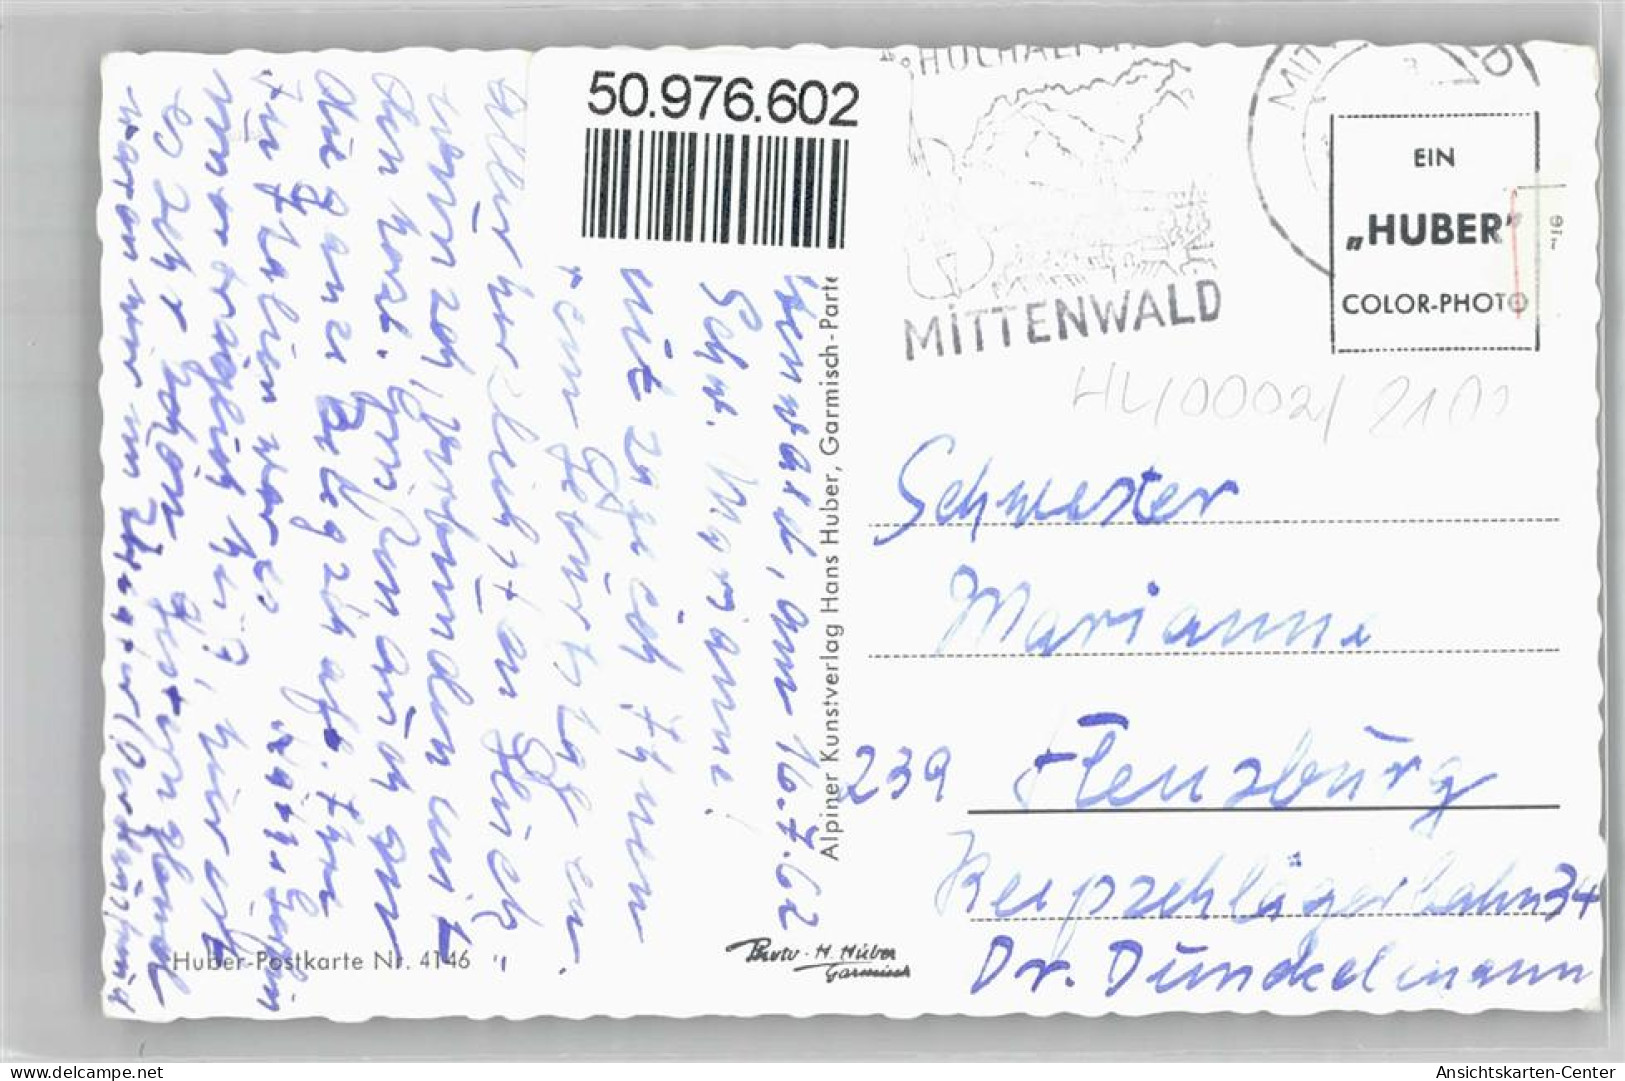 50976602 - Mittenwald - Mittenwald